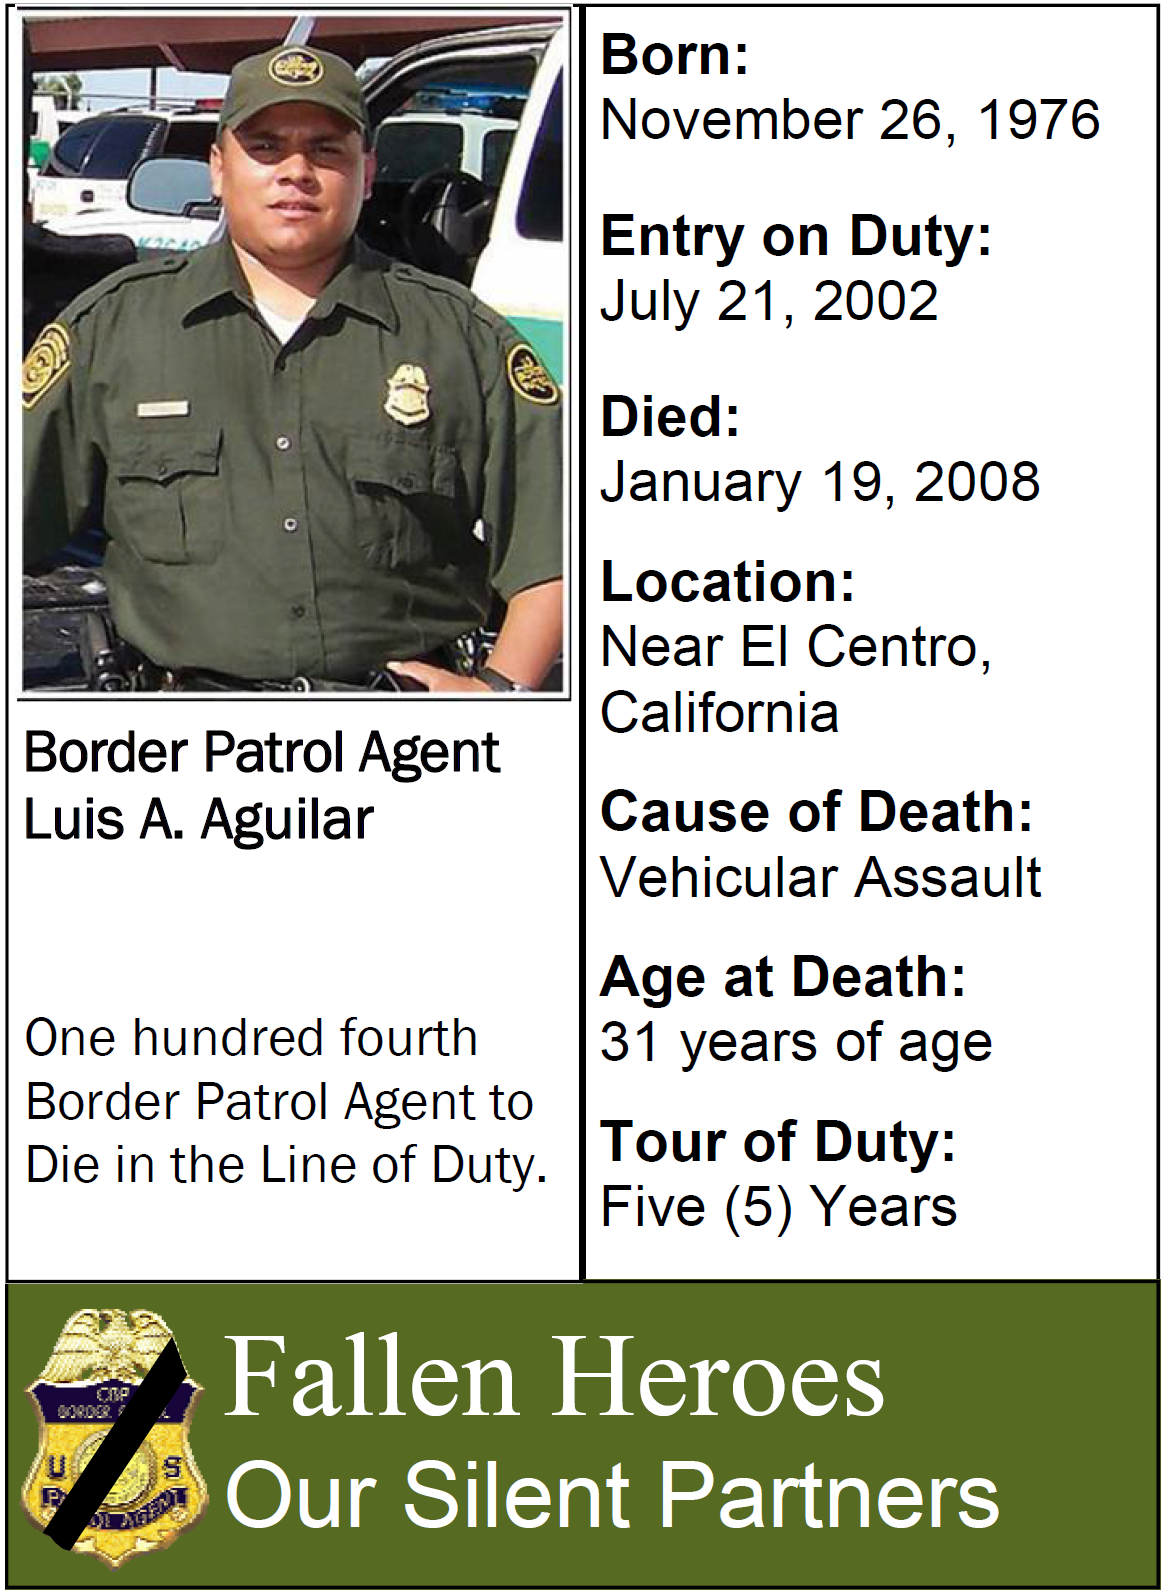 Image of Border Patrol Agent Luis Aguilar's Silent Partner card.